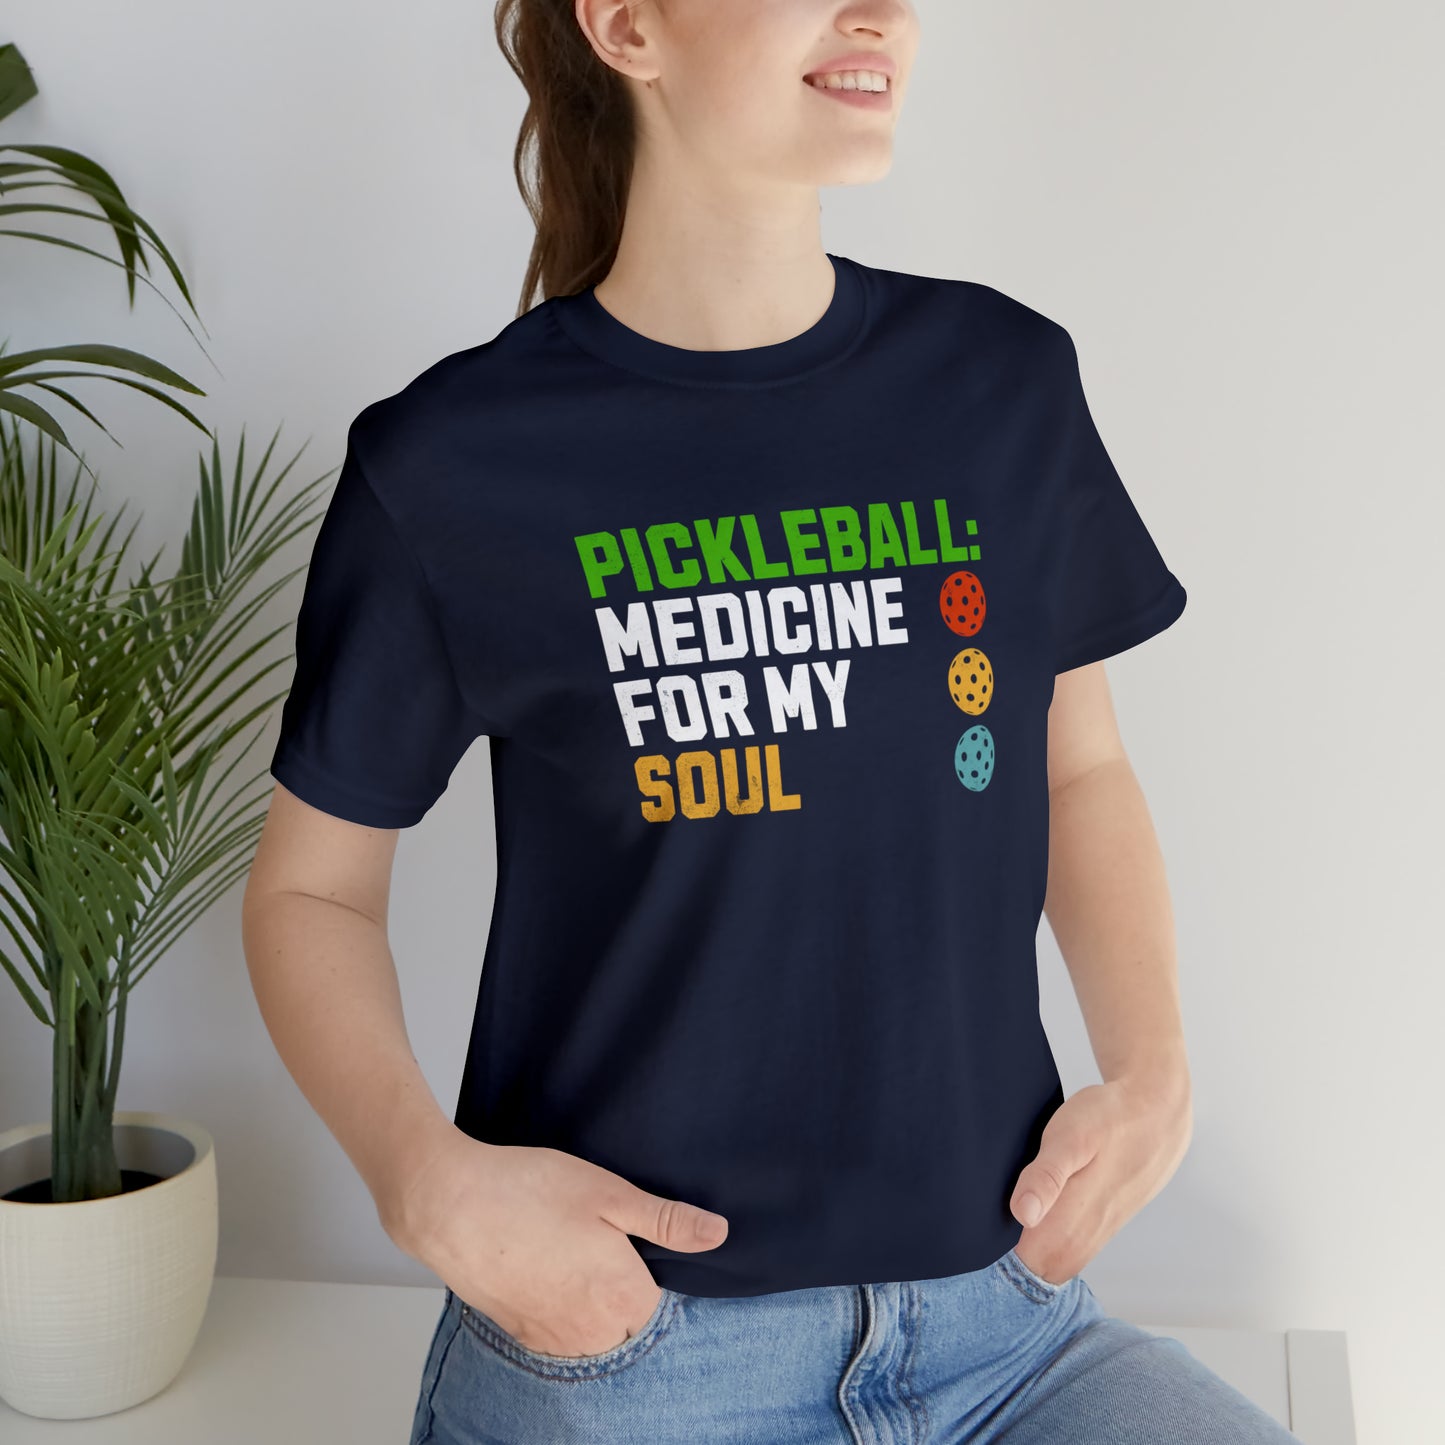 Pickleball, Medicine for My Soul T-Shirt